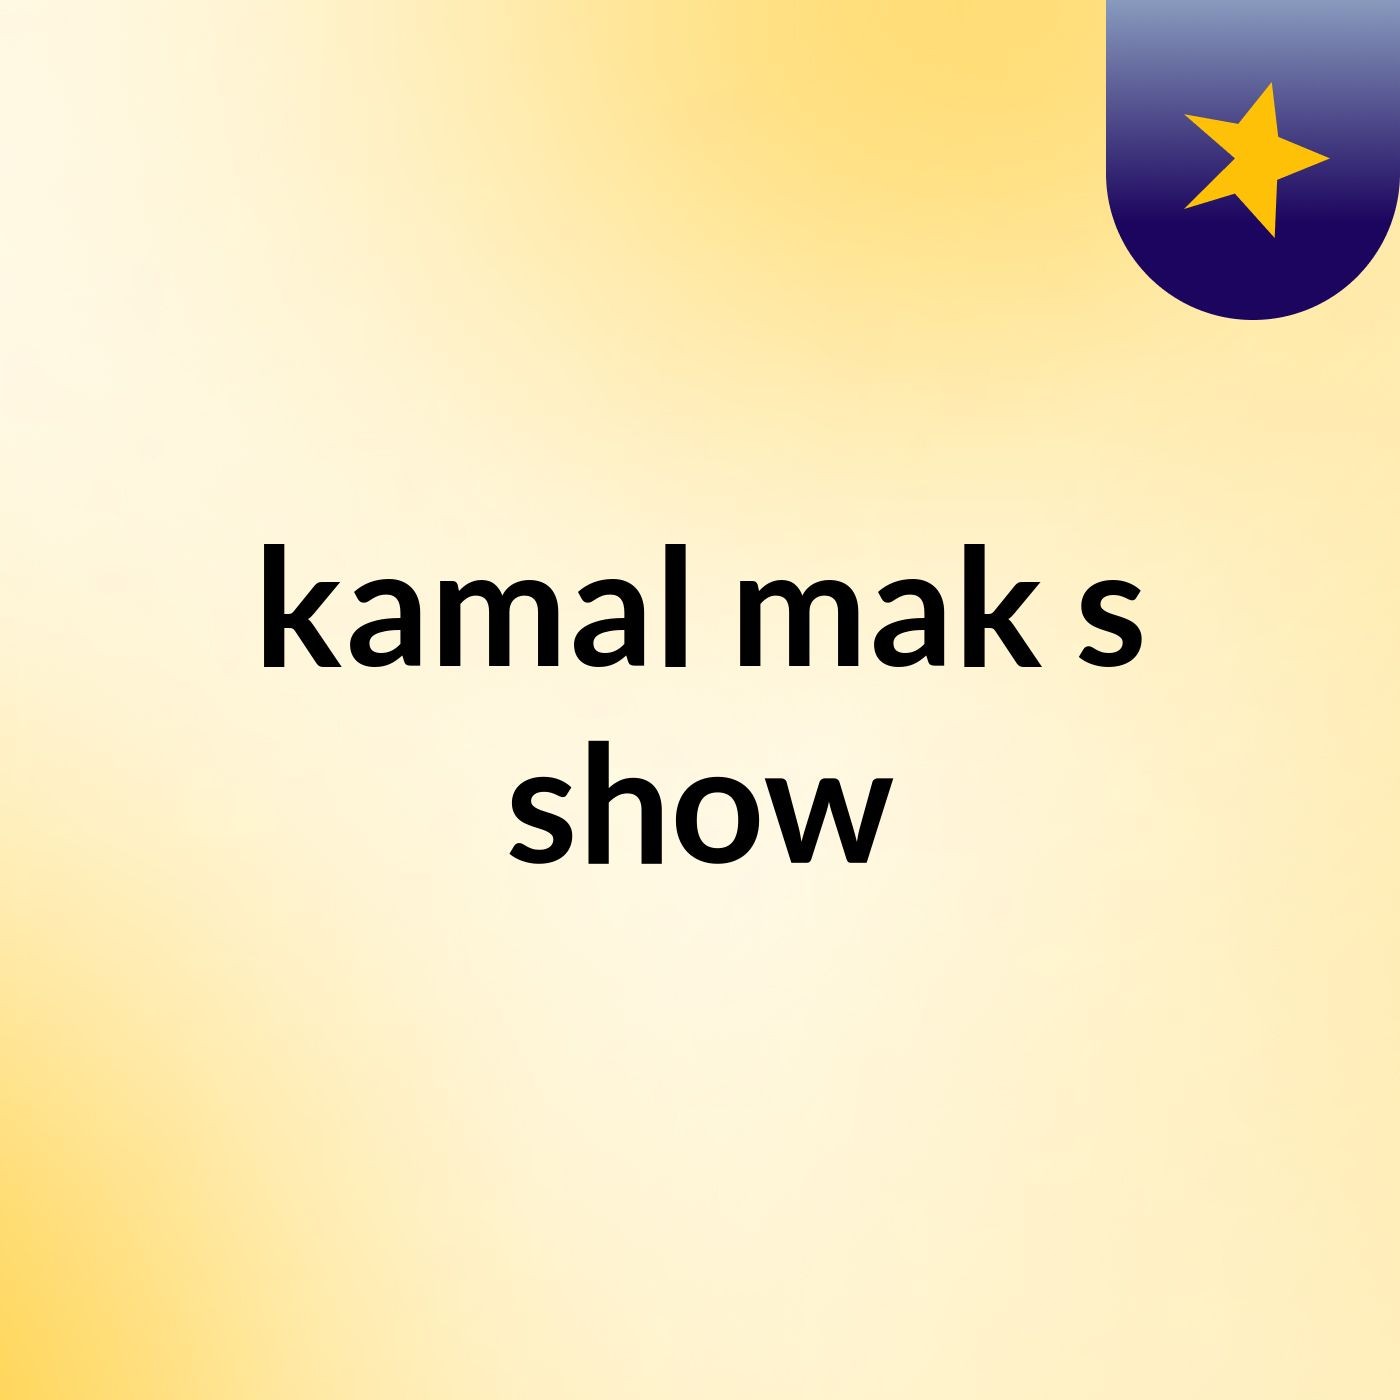 kamal mak's show